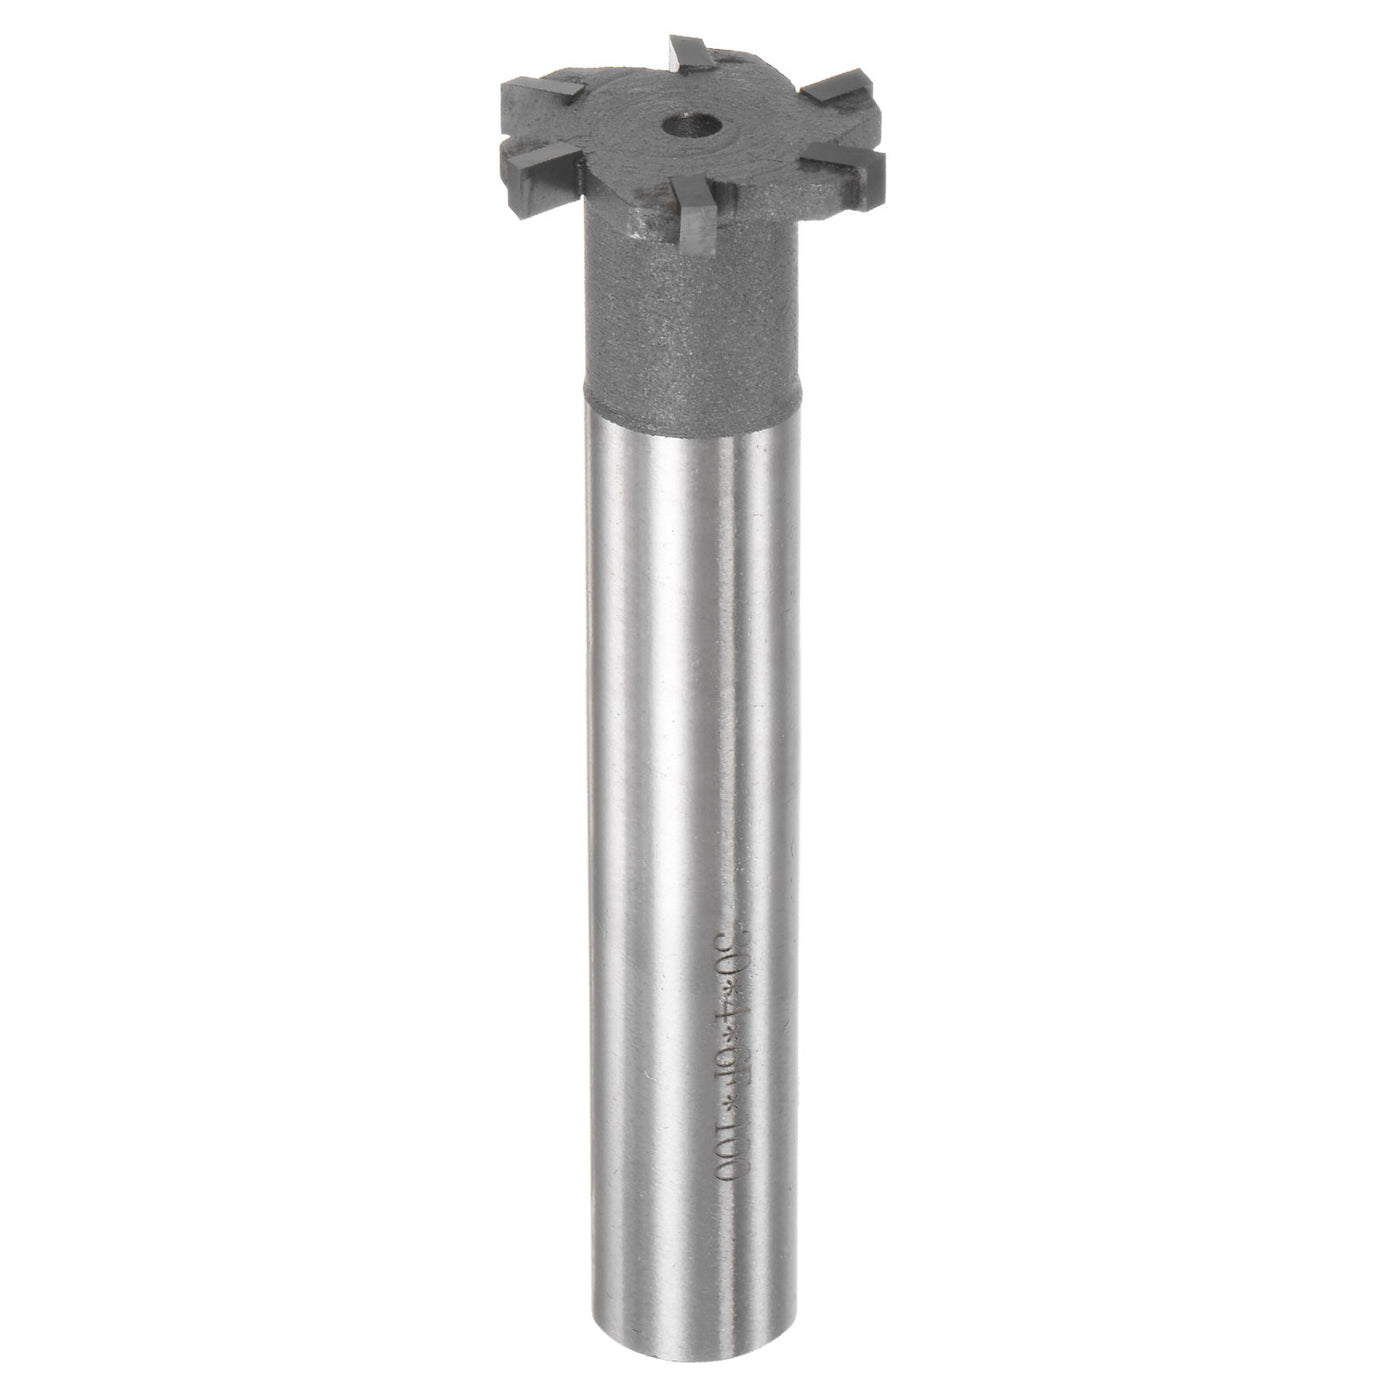 uxcell Uxcell 4mm Depth 30mm Cutting Dia 16mm Shank Carbide Tip 6 Flute T-Slot Milling Cutter